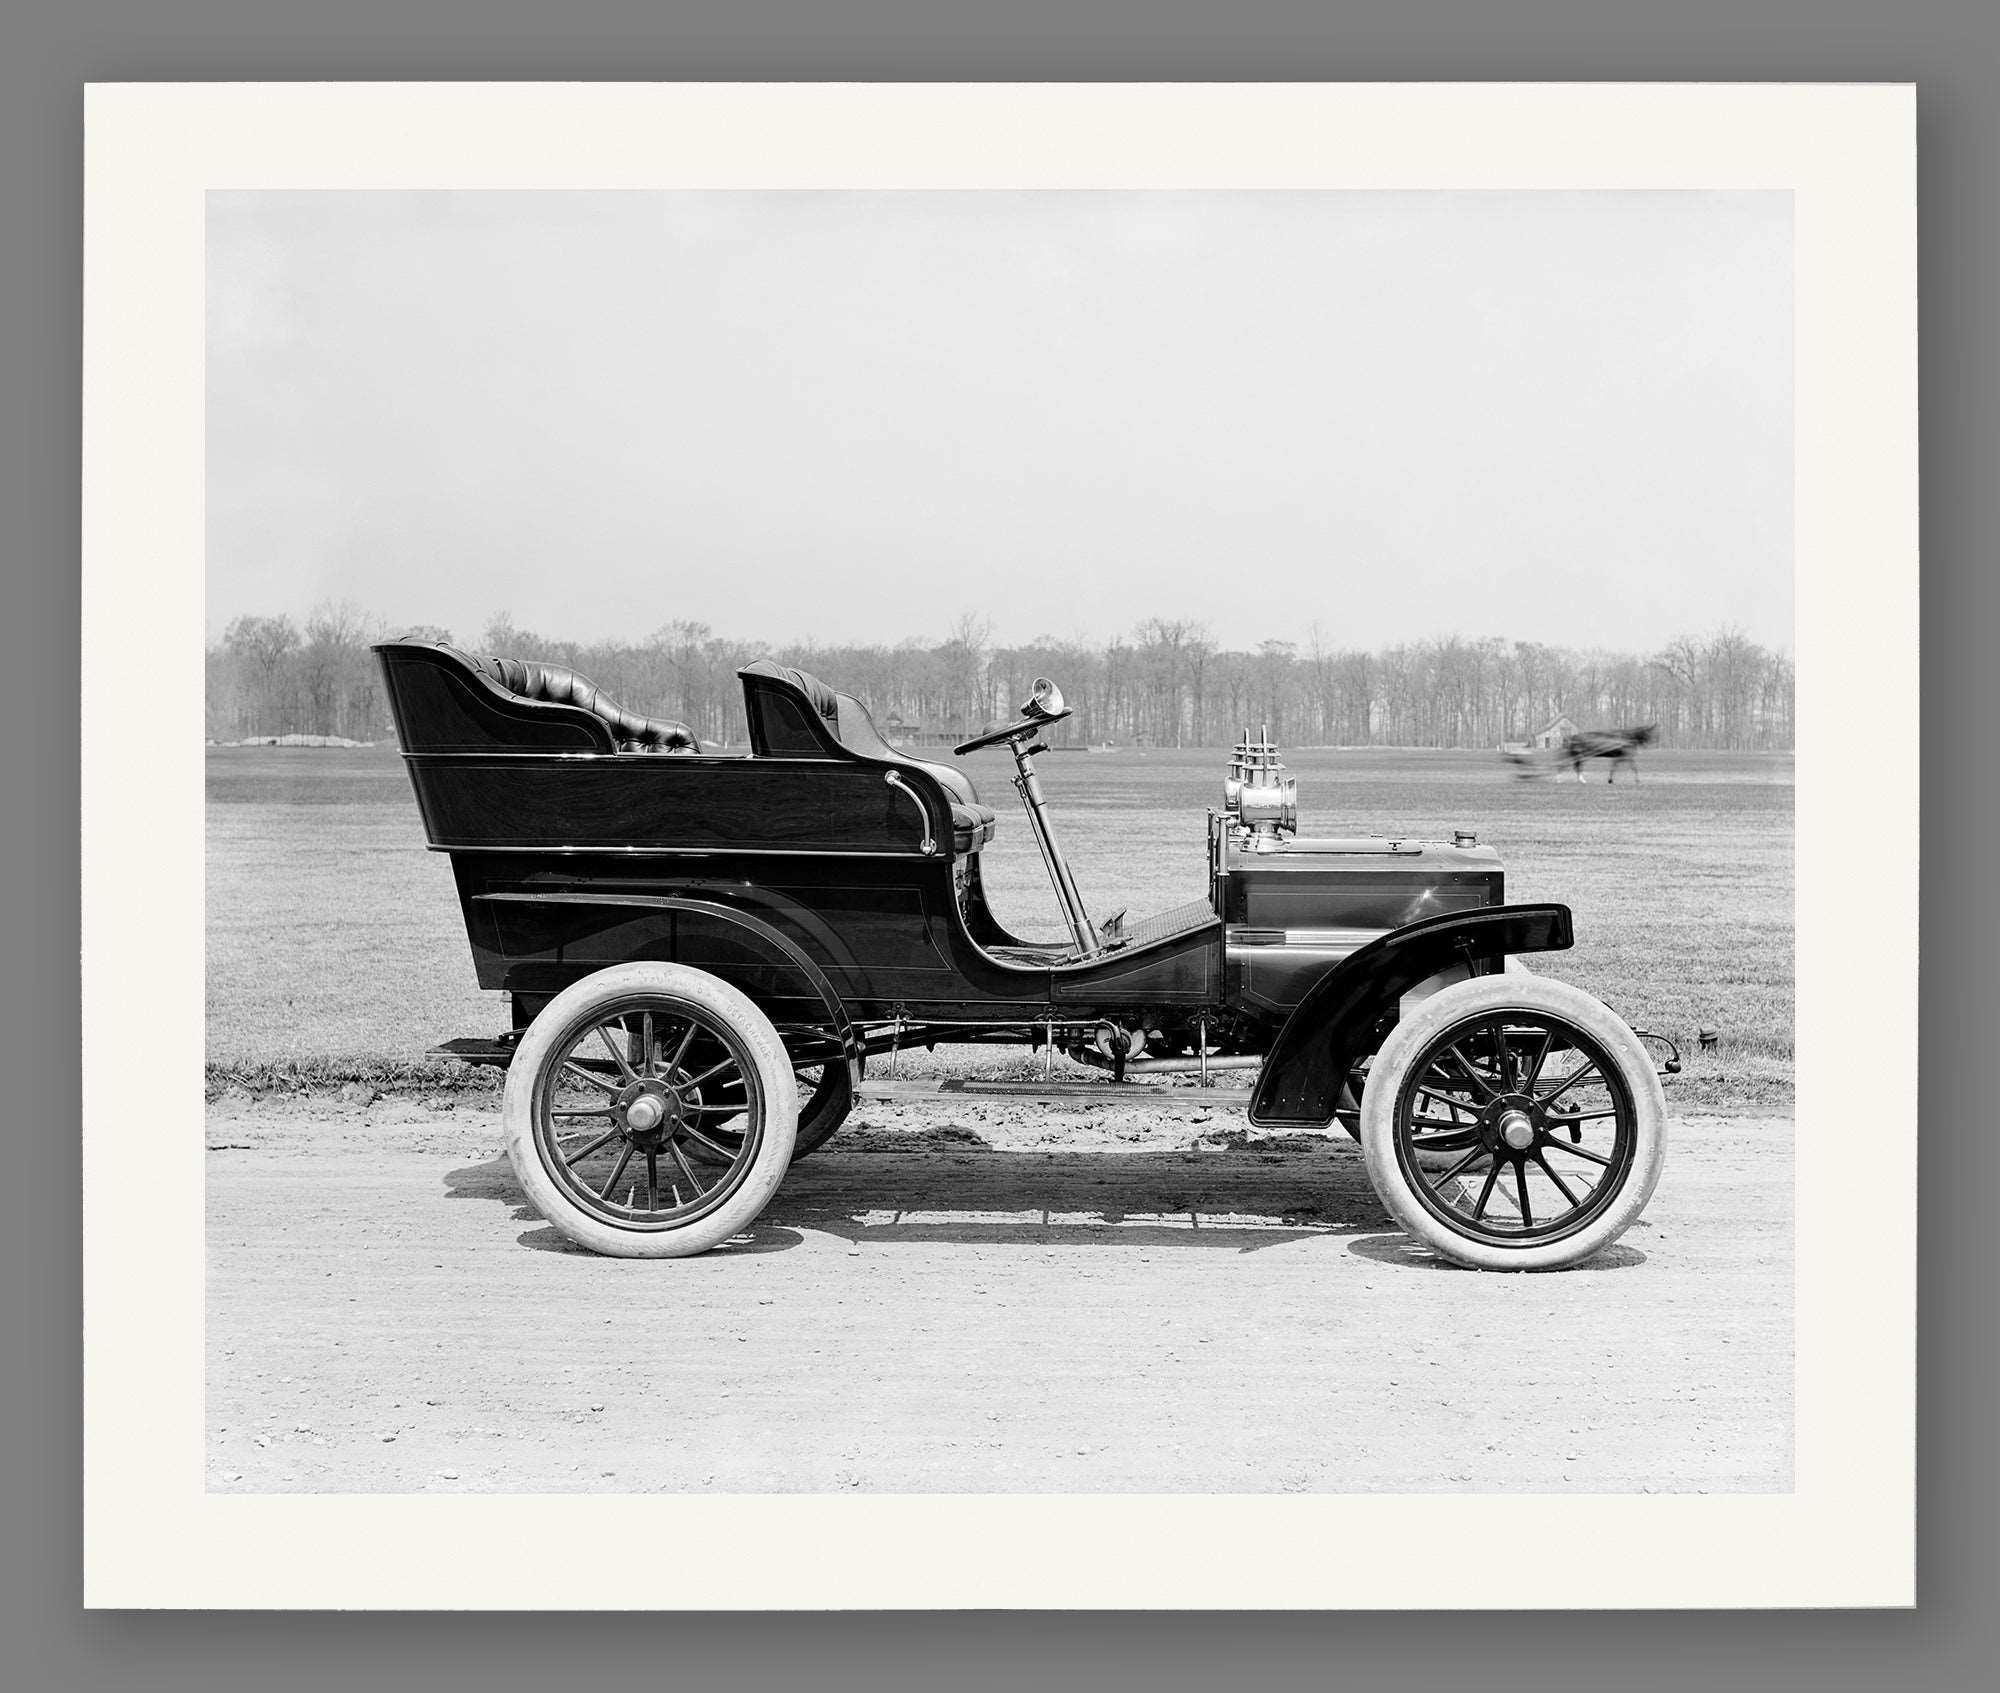 A fine art paper print of a vintage photograph of a vintage vehicle